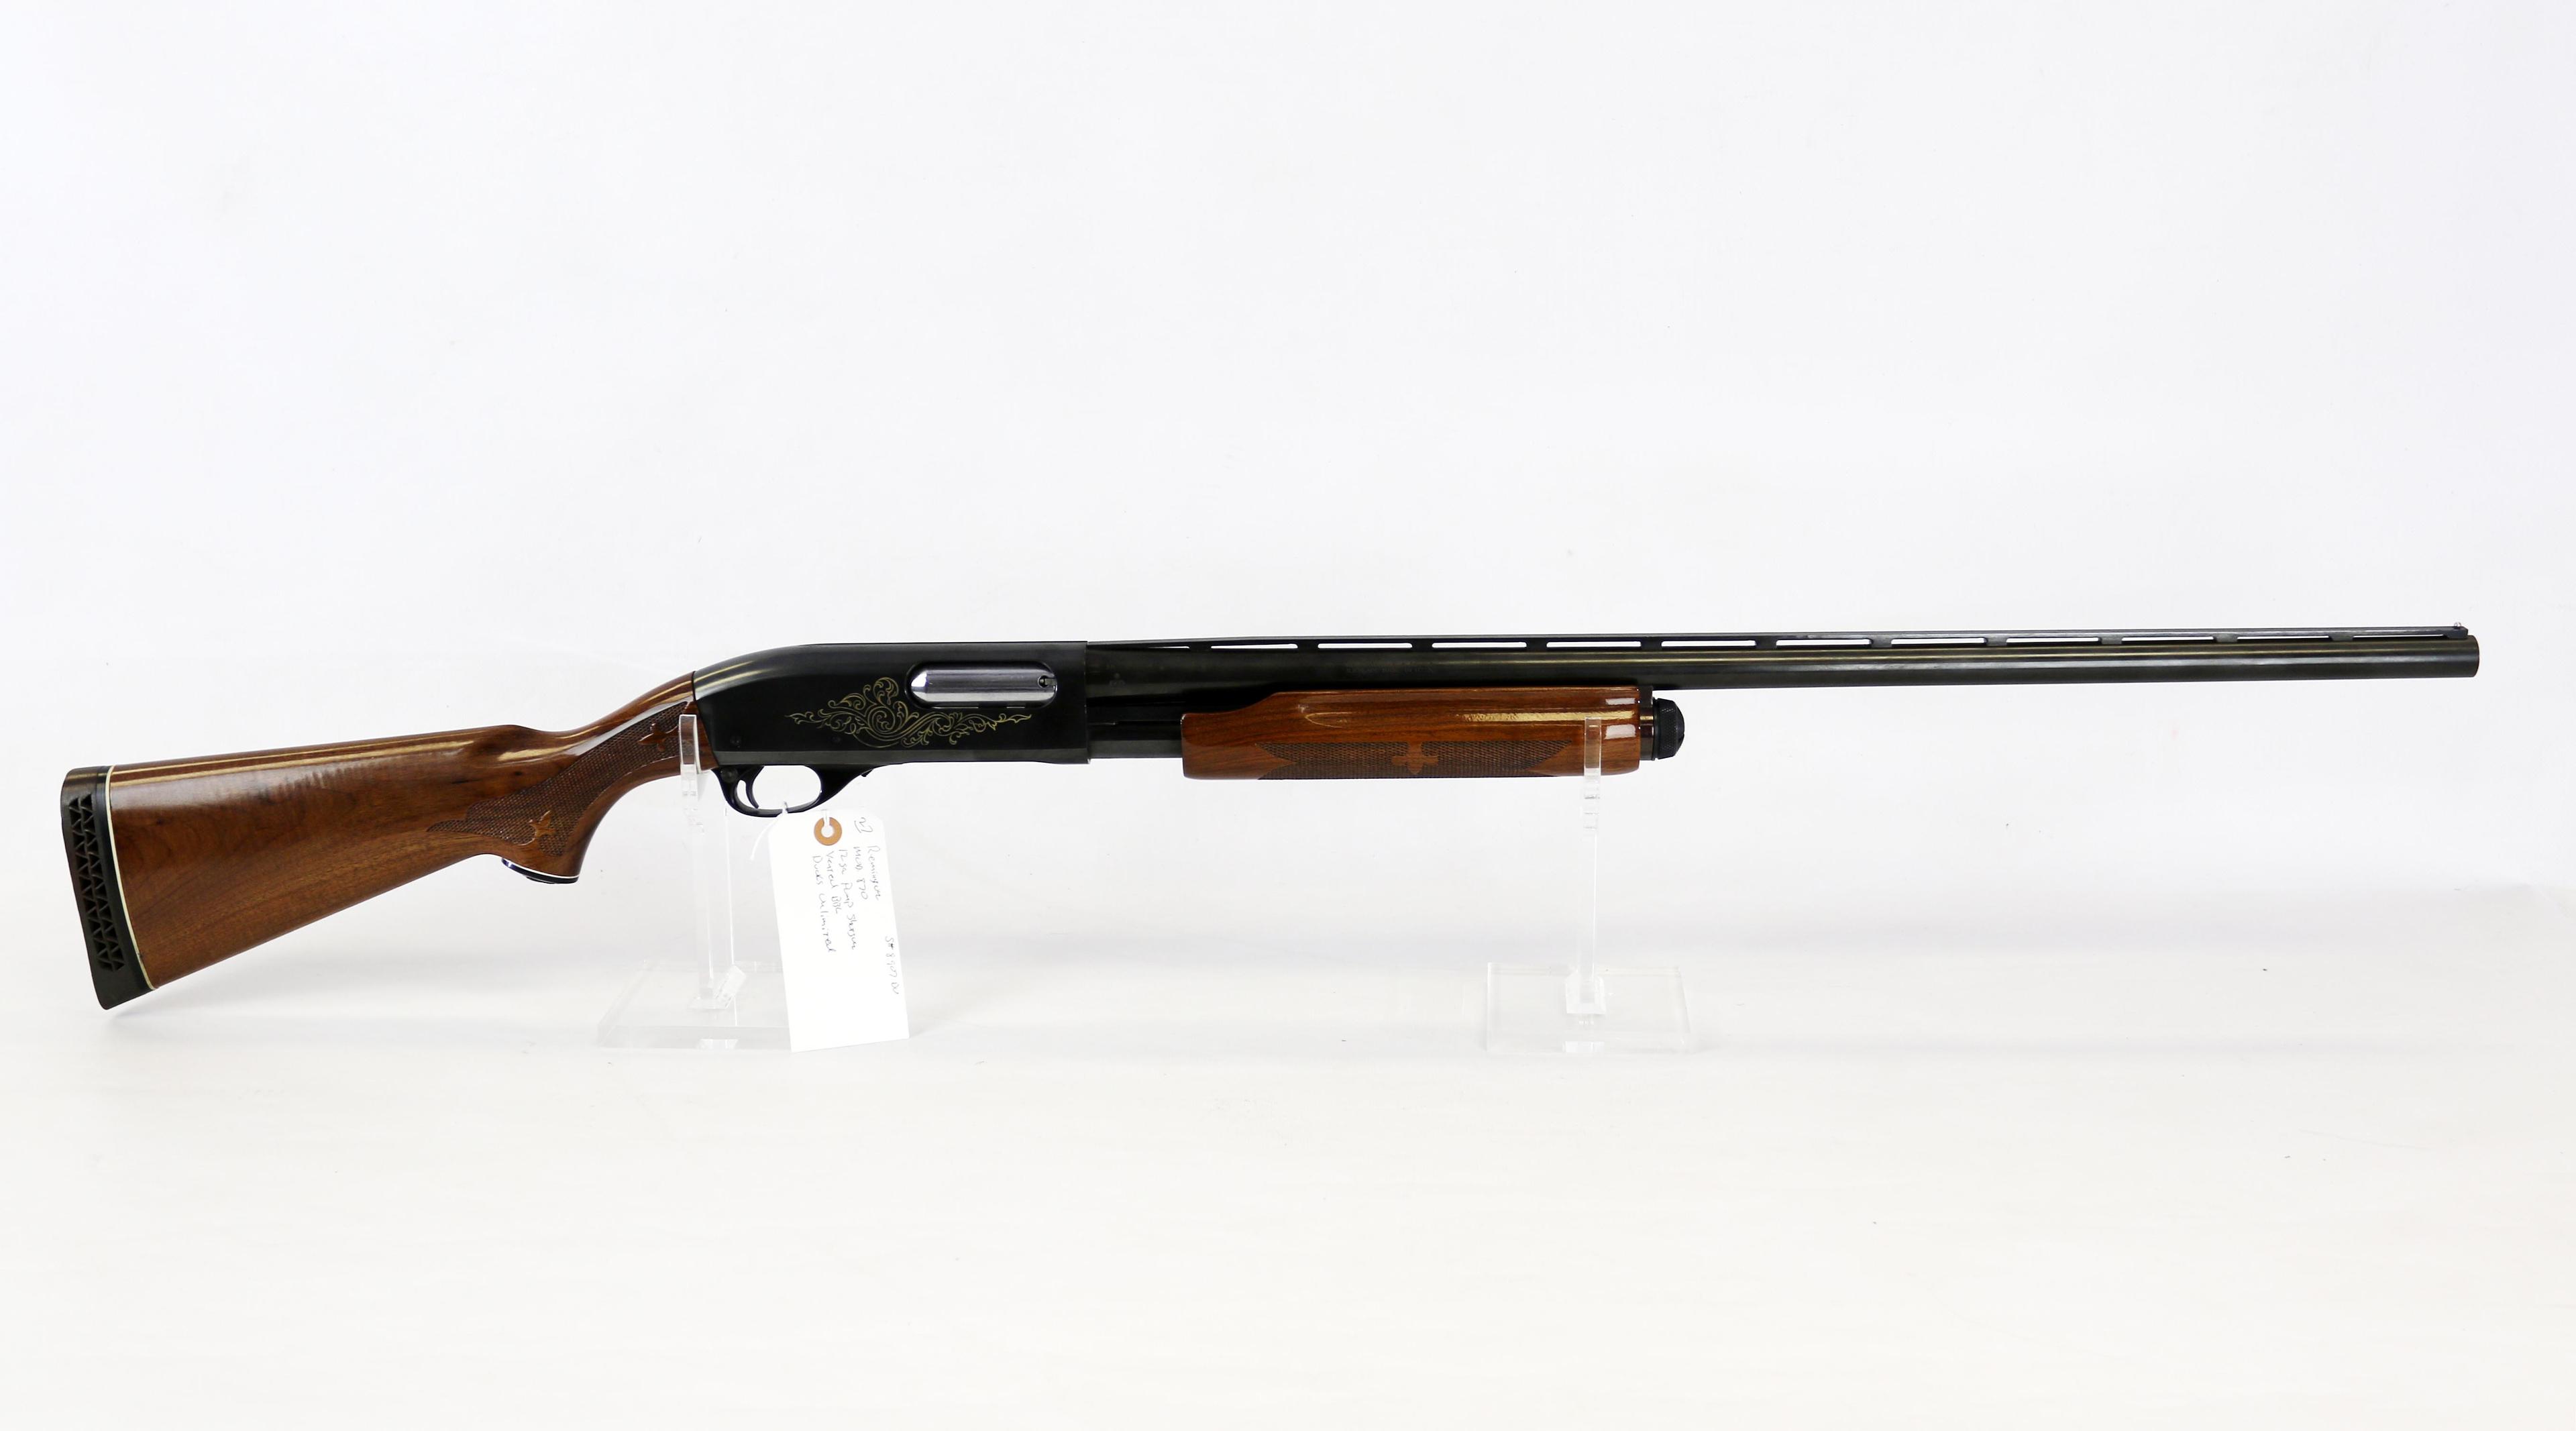 Remington mod 870 12 ga pump shotgun